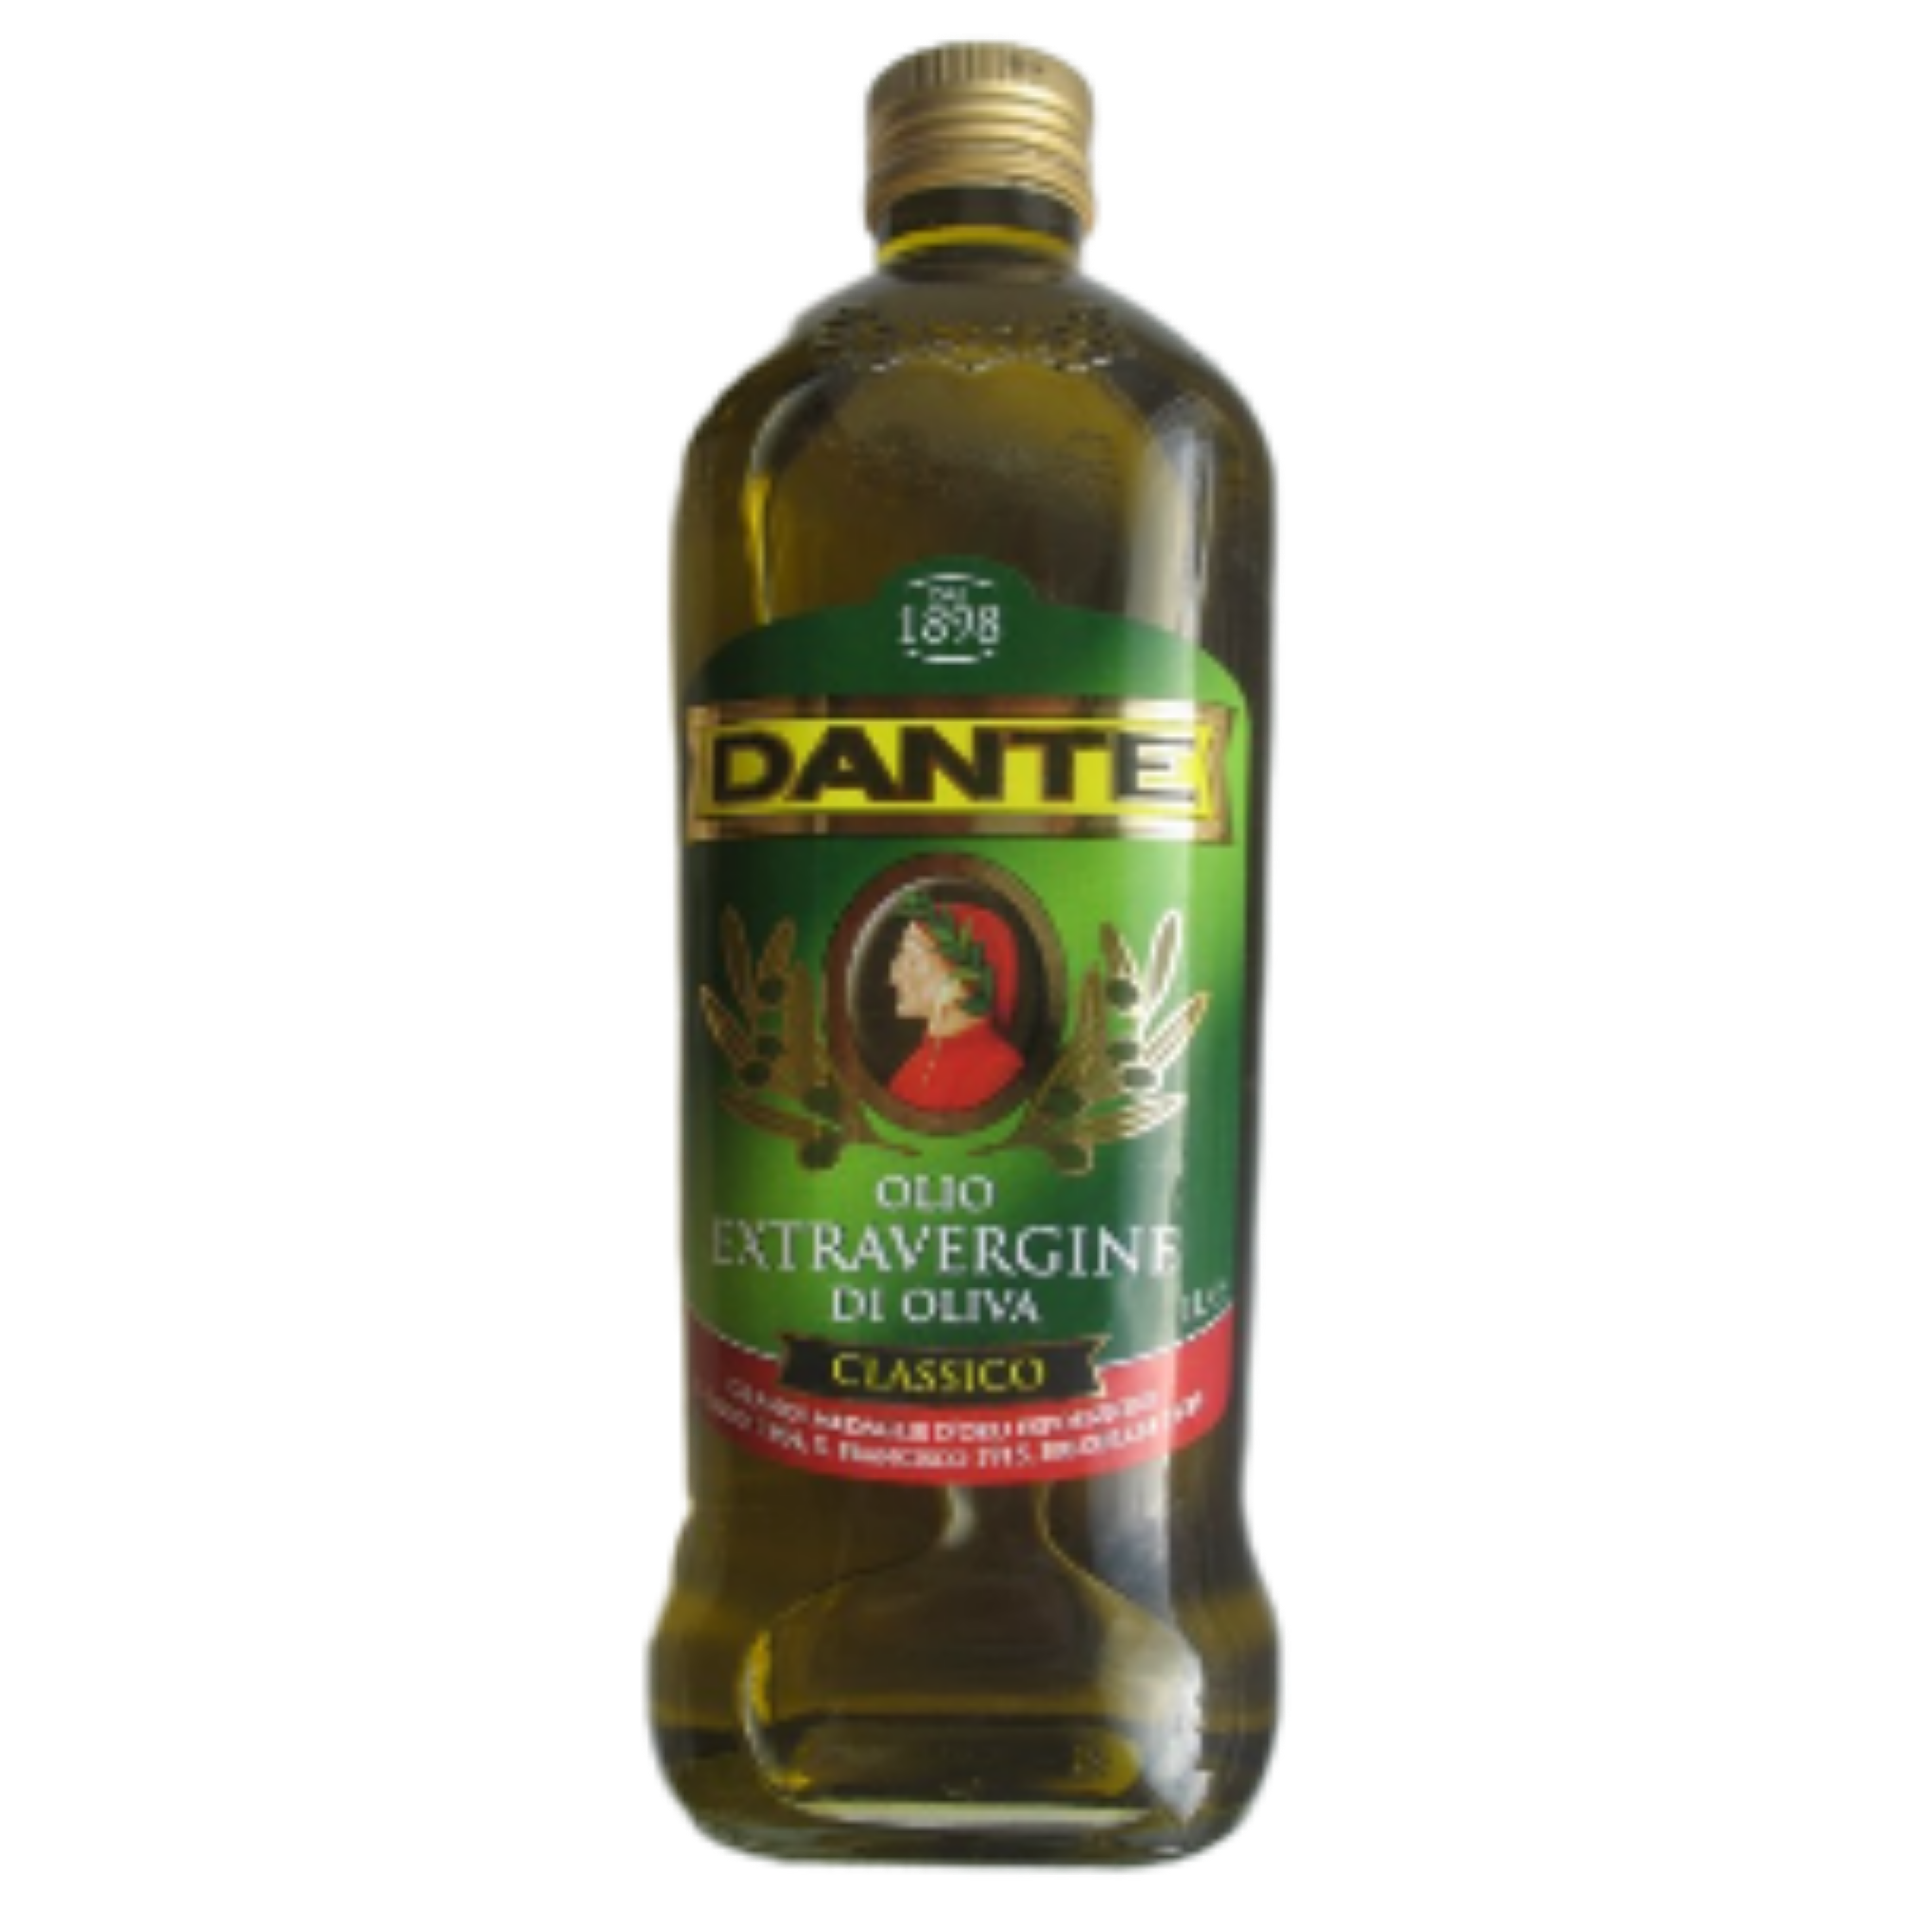 Dante Extra Virgin Olive Oils